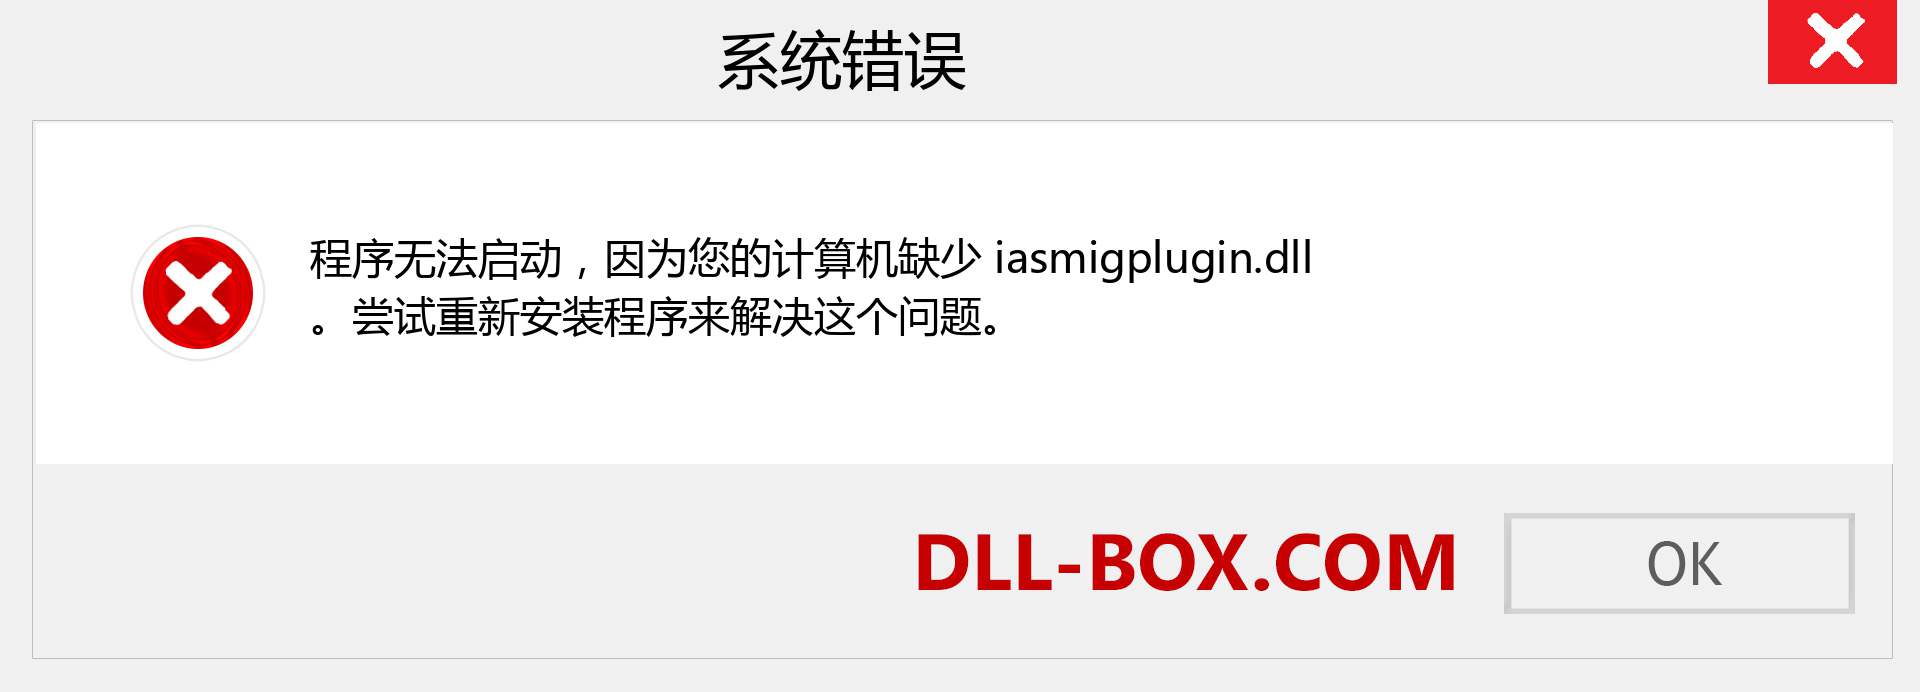 iasmigplugin.dll 文件丢失？。 适用于 Windows 7、8、10 的下载 - 修复 Windows、照片、图像上的 iasmigplugin dll 丢失错误